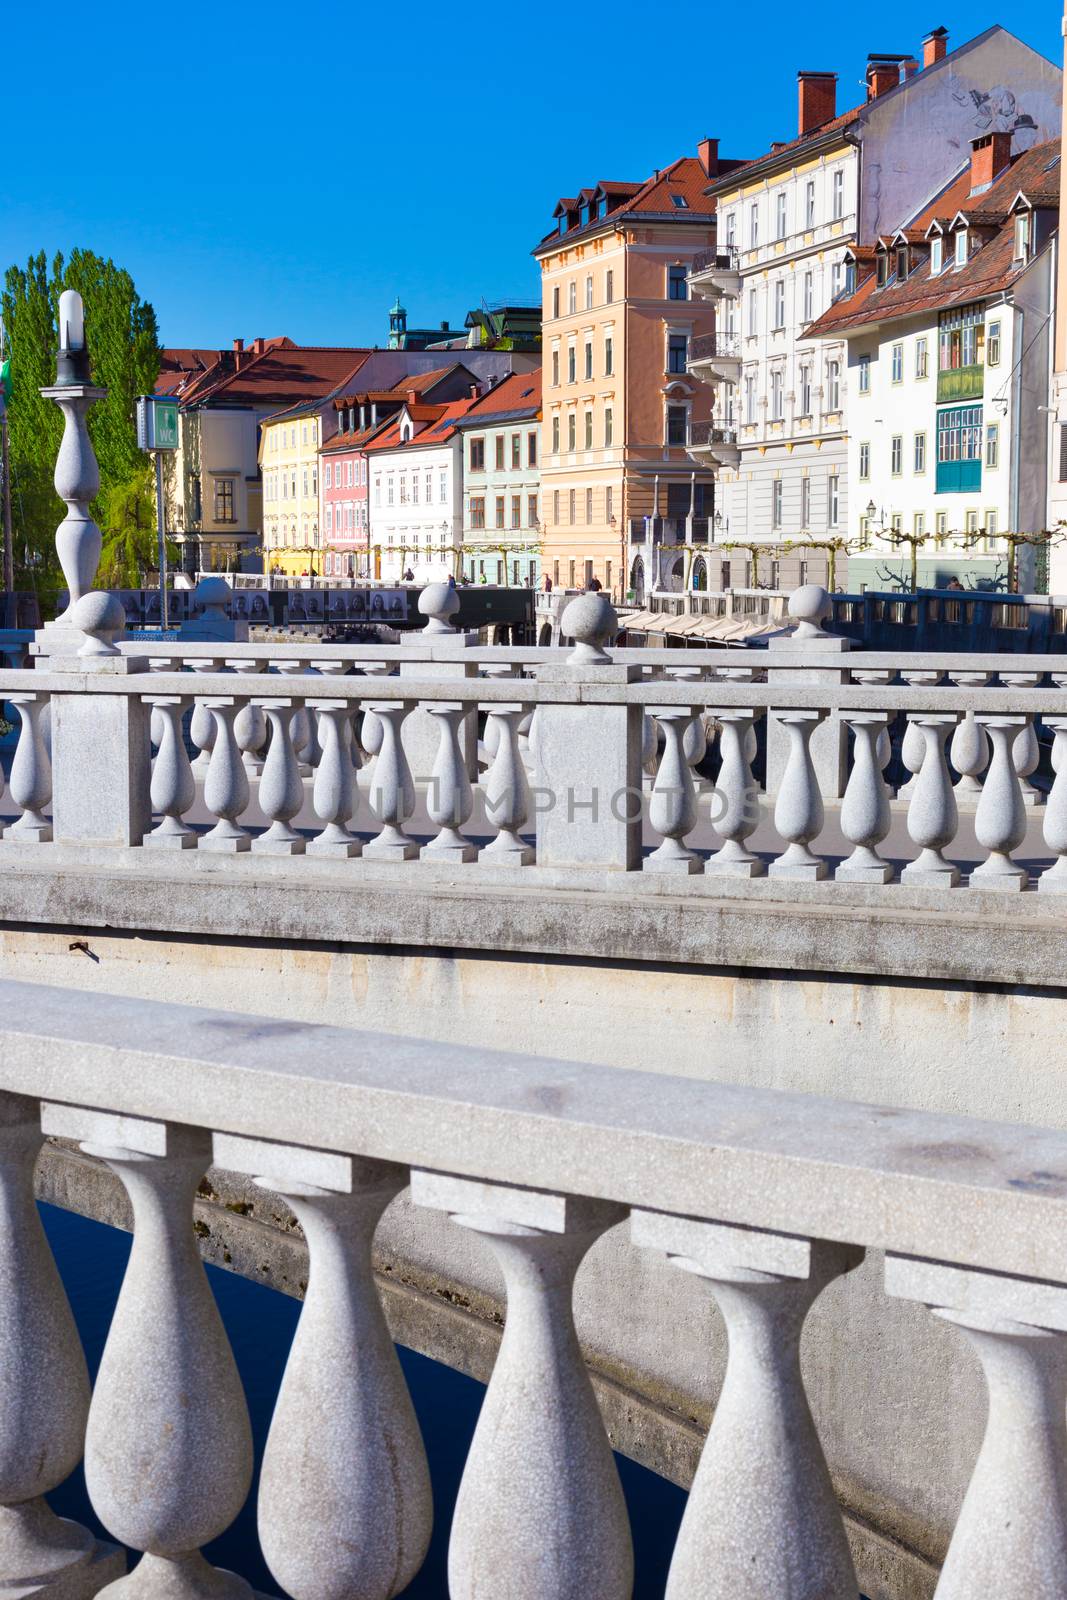 Romantic medieval Ljubljana's city center, the capital of Slovenia, Europe. Gallus bank of river Ljubljanica with Cobblers' Bridge or the Shoemakers' Bridge.